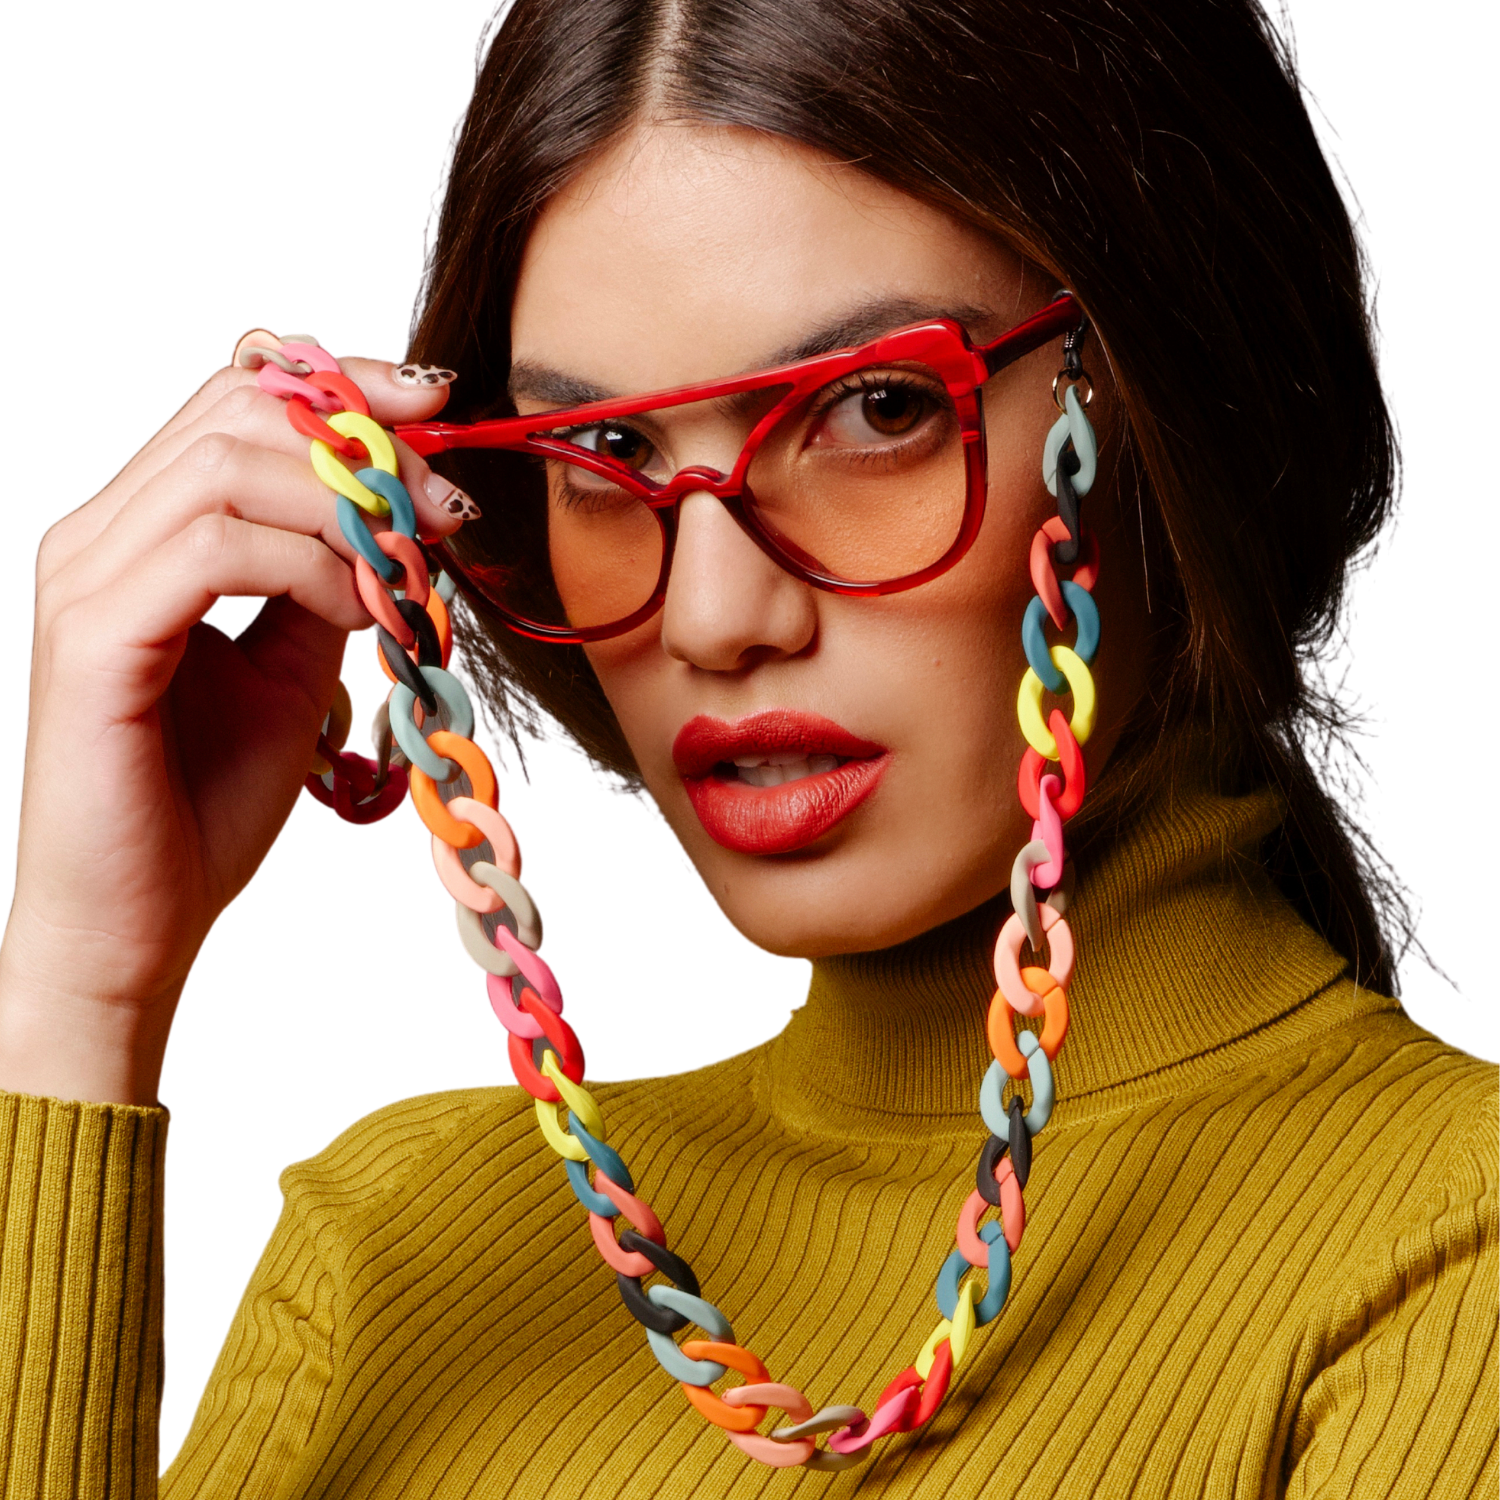 Rainbow Glasses Chain – Cibelle Eyewear